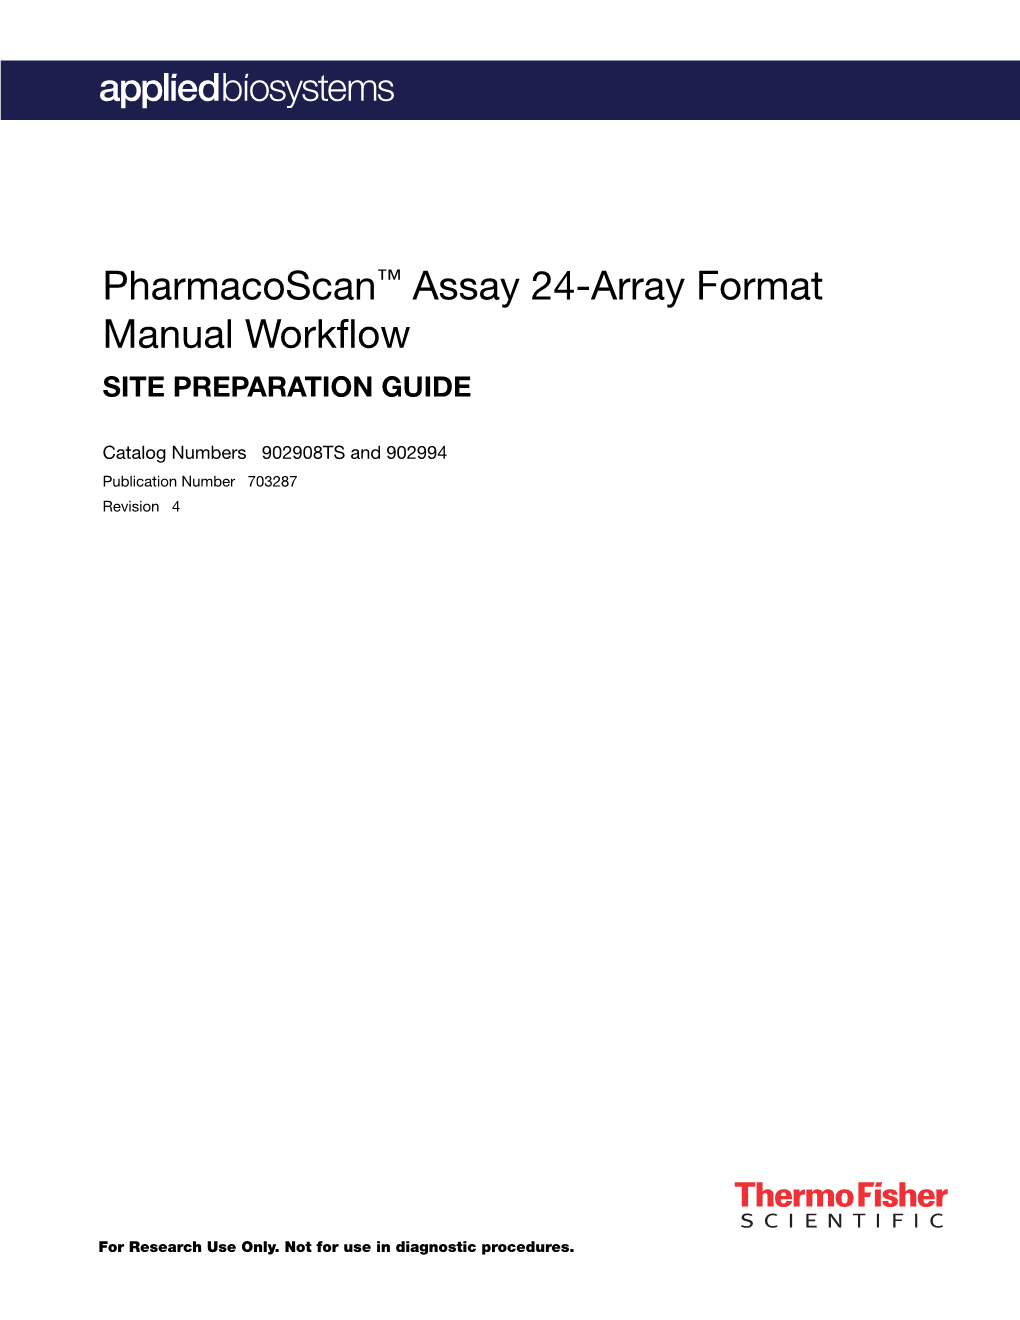 Pharmacoscan Assay 24-Array Format Manual Workflow  Equipment Manufacturer Cat